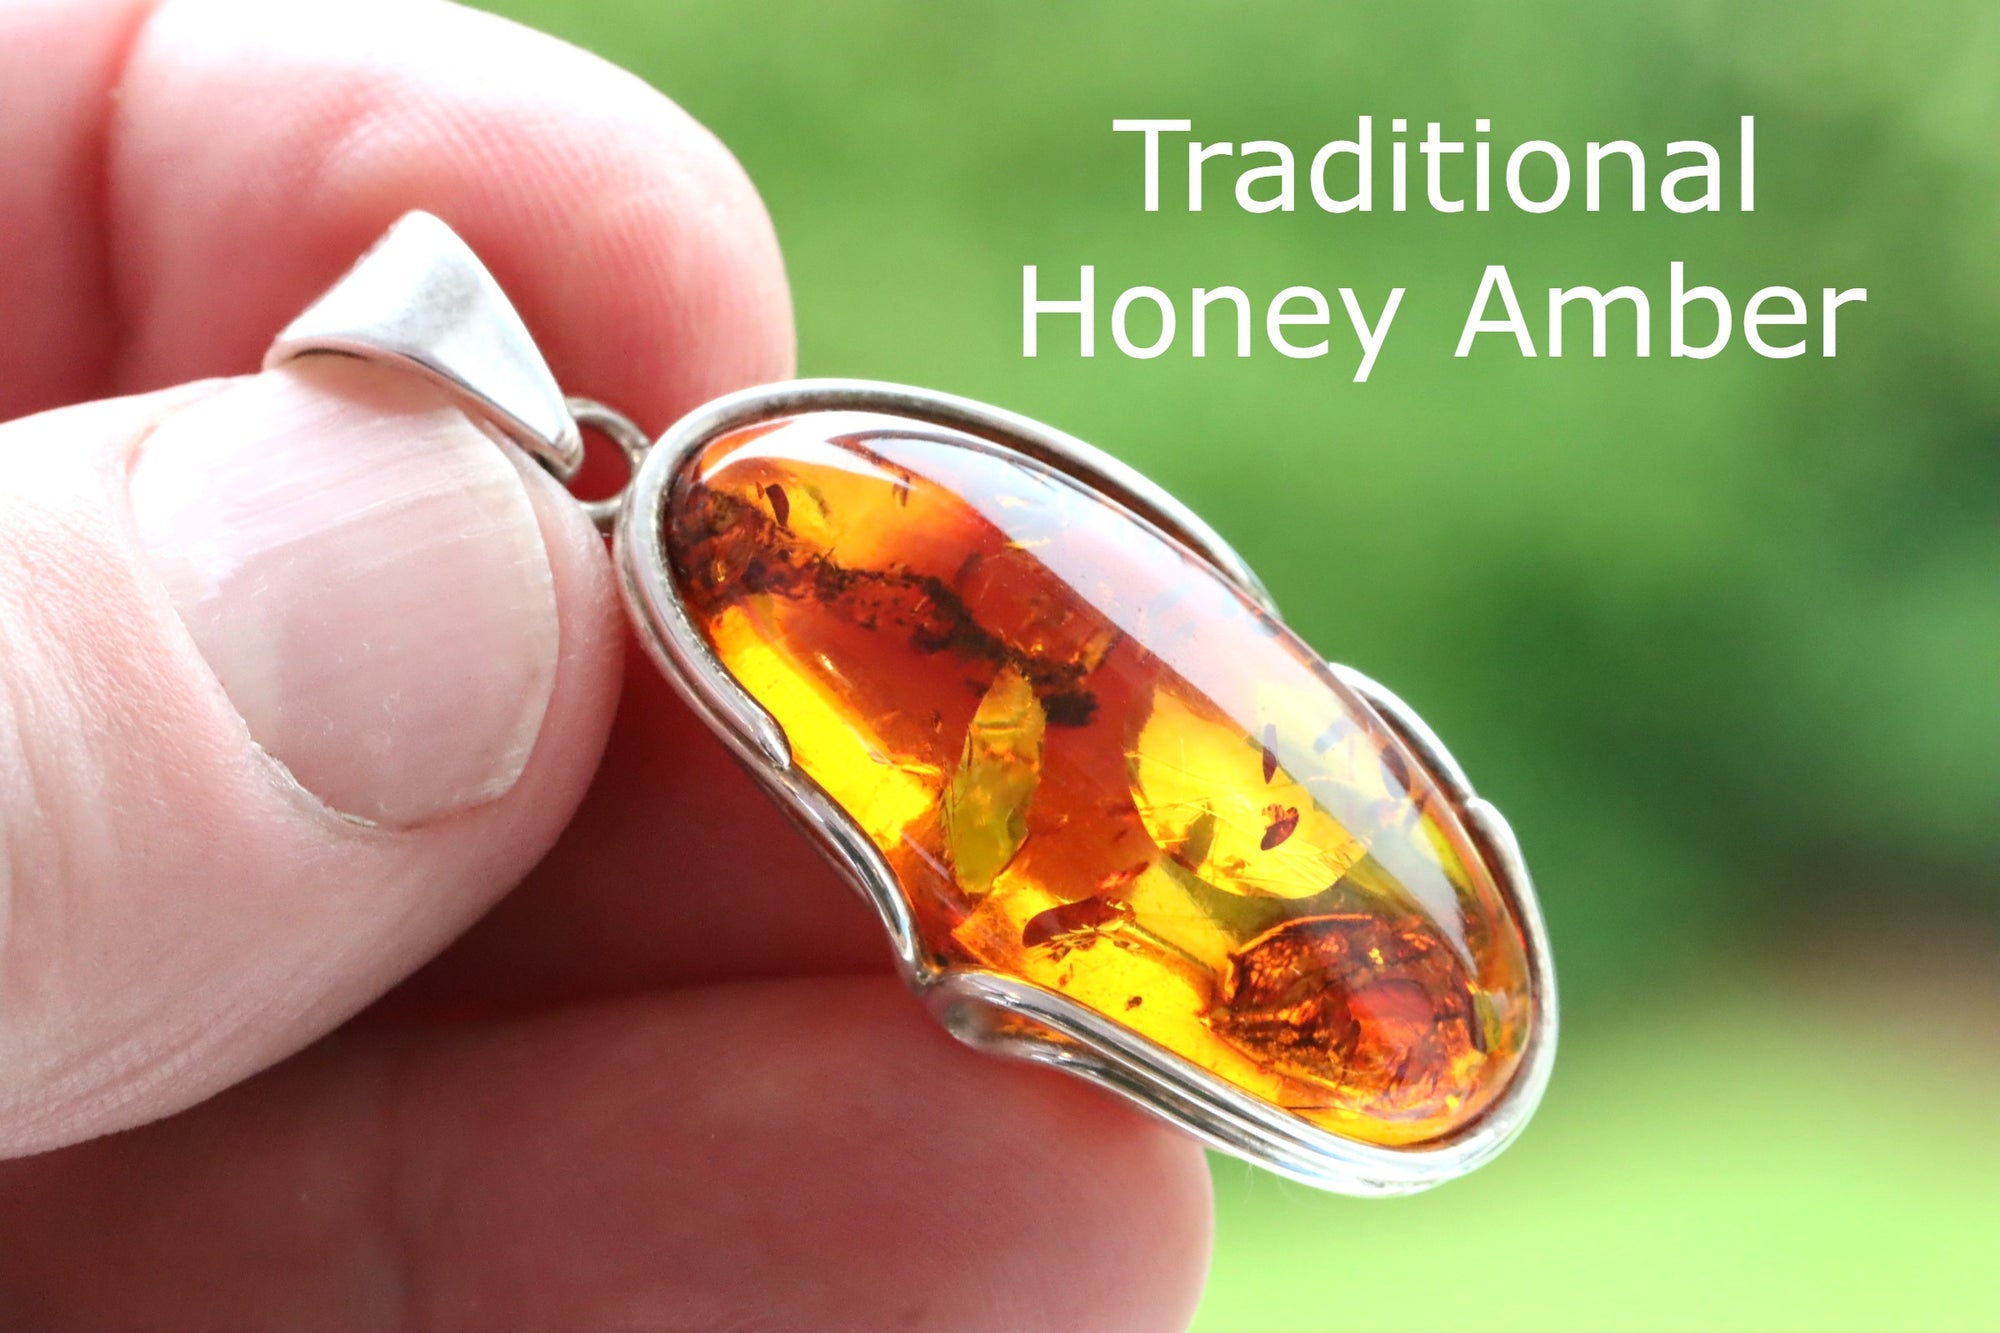 Oval Honey Amber Gemstone Pendant on 925 Sterling Silver